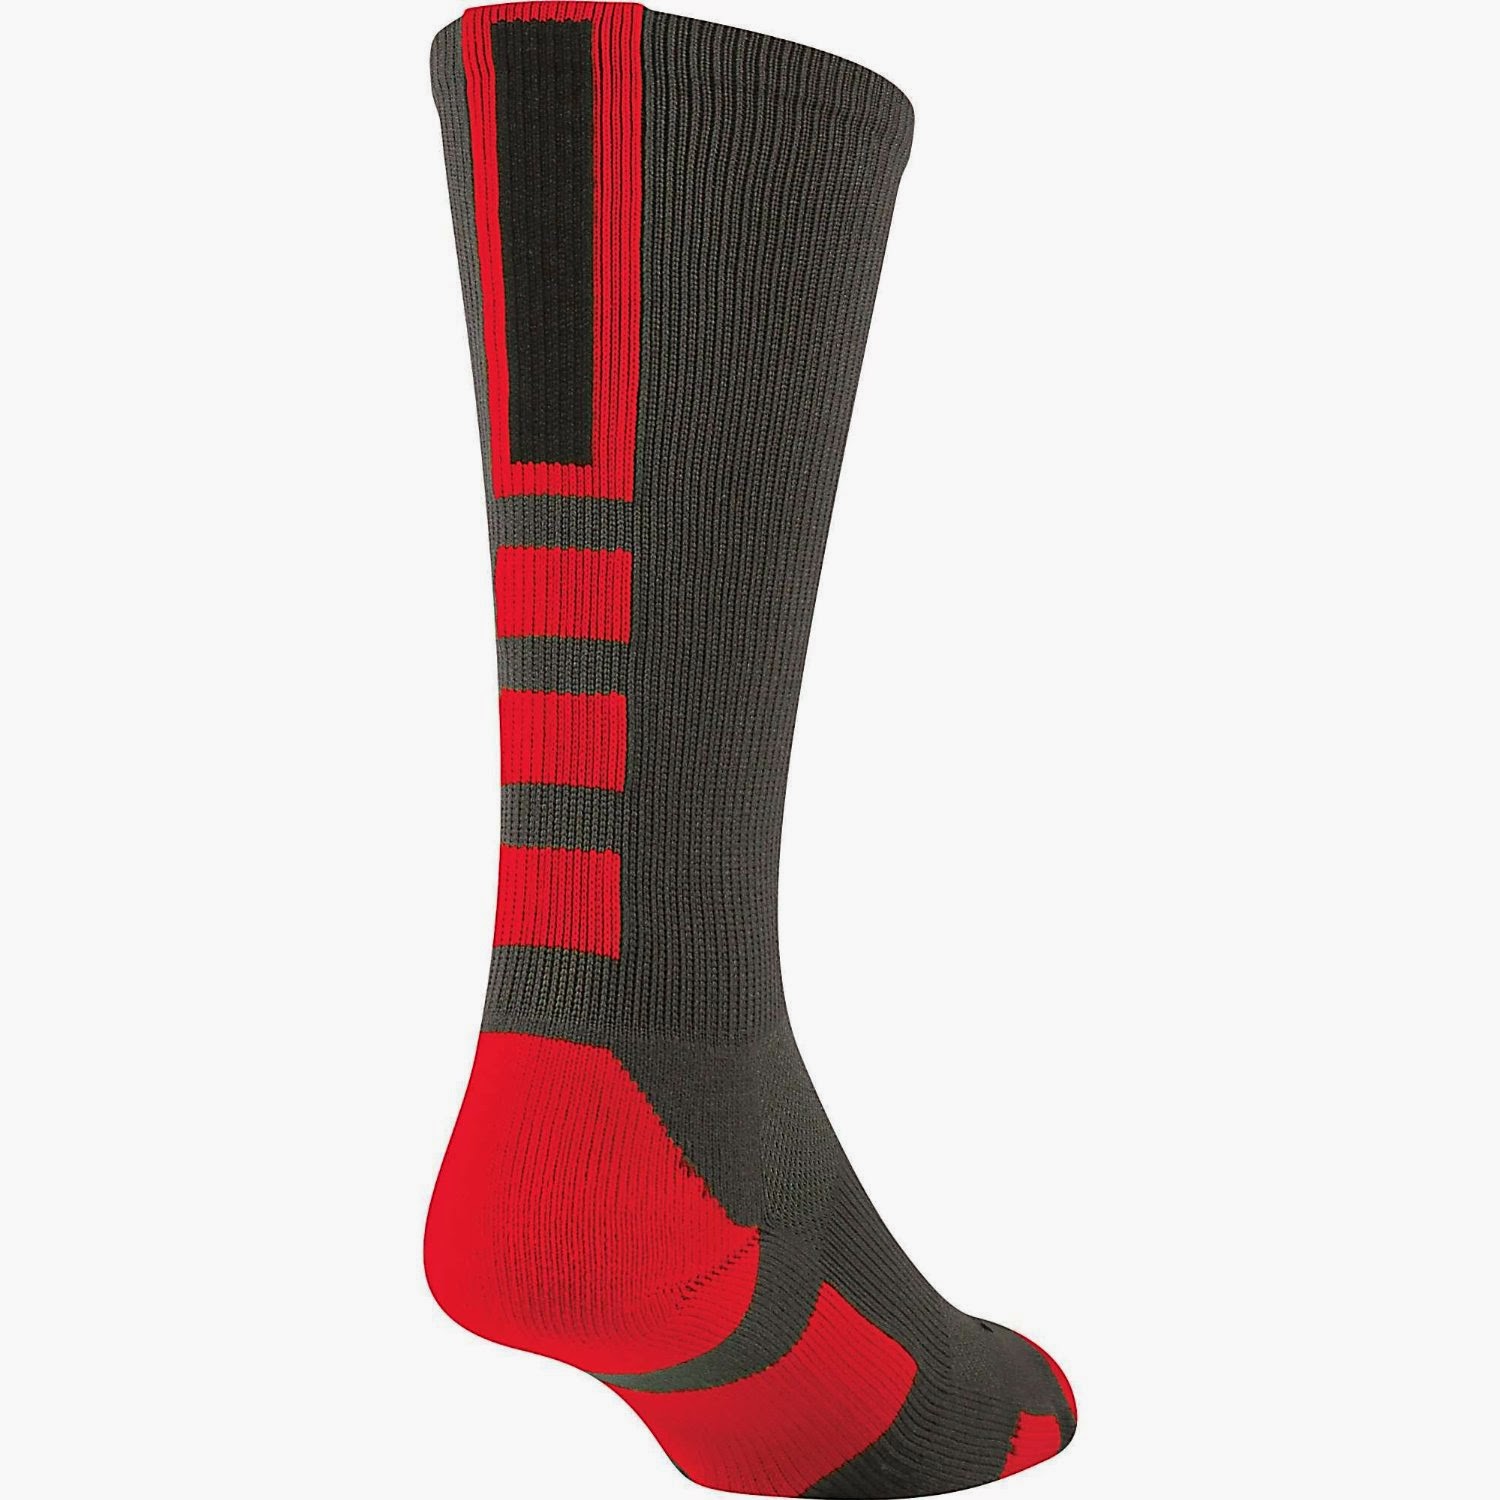 custom elite socks: nike elite socks